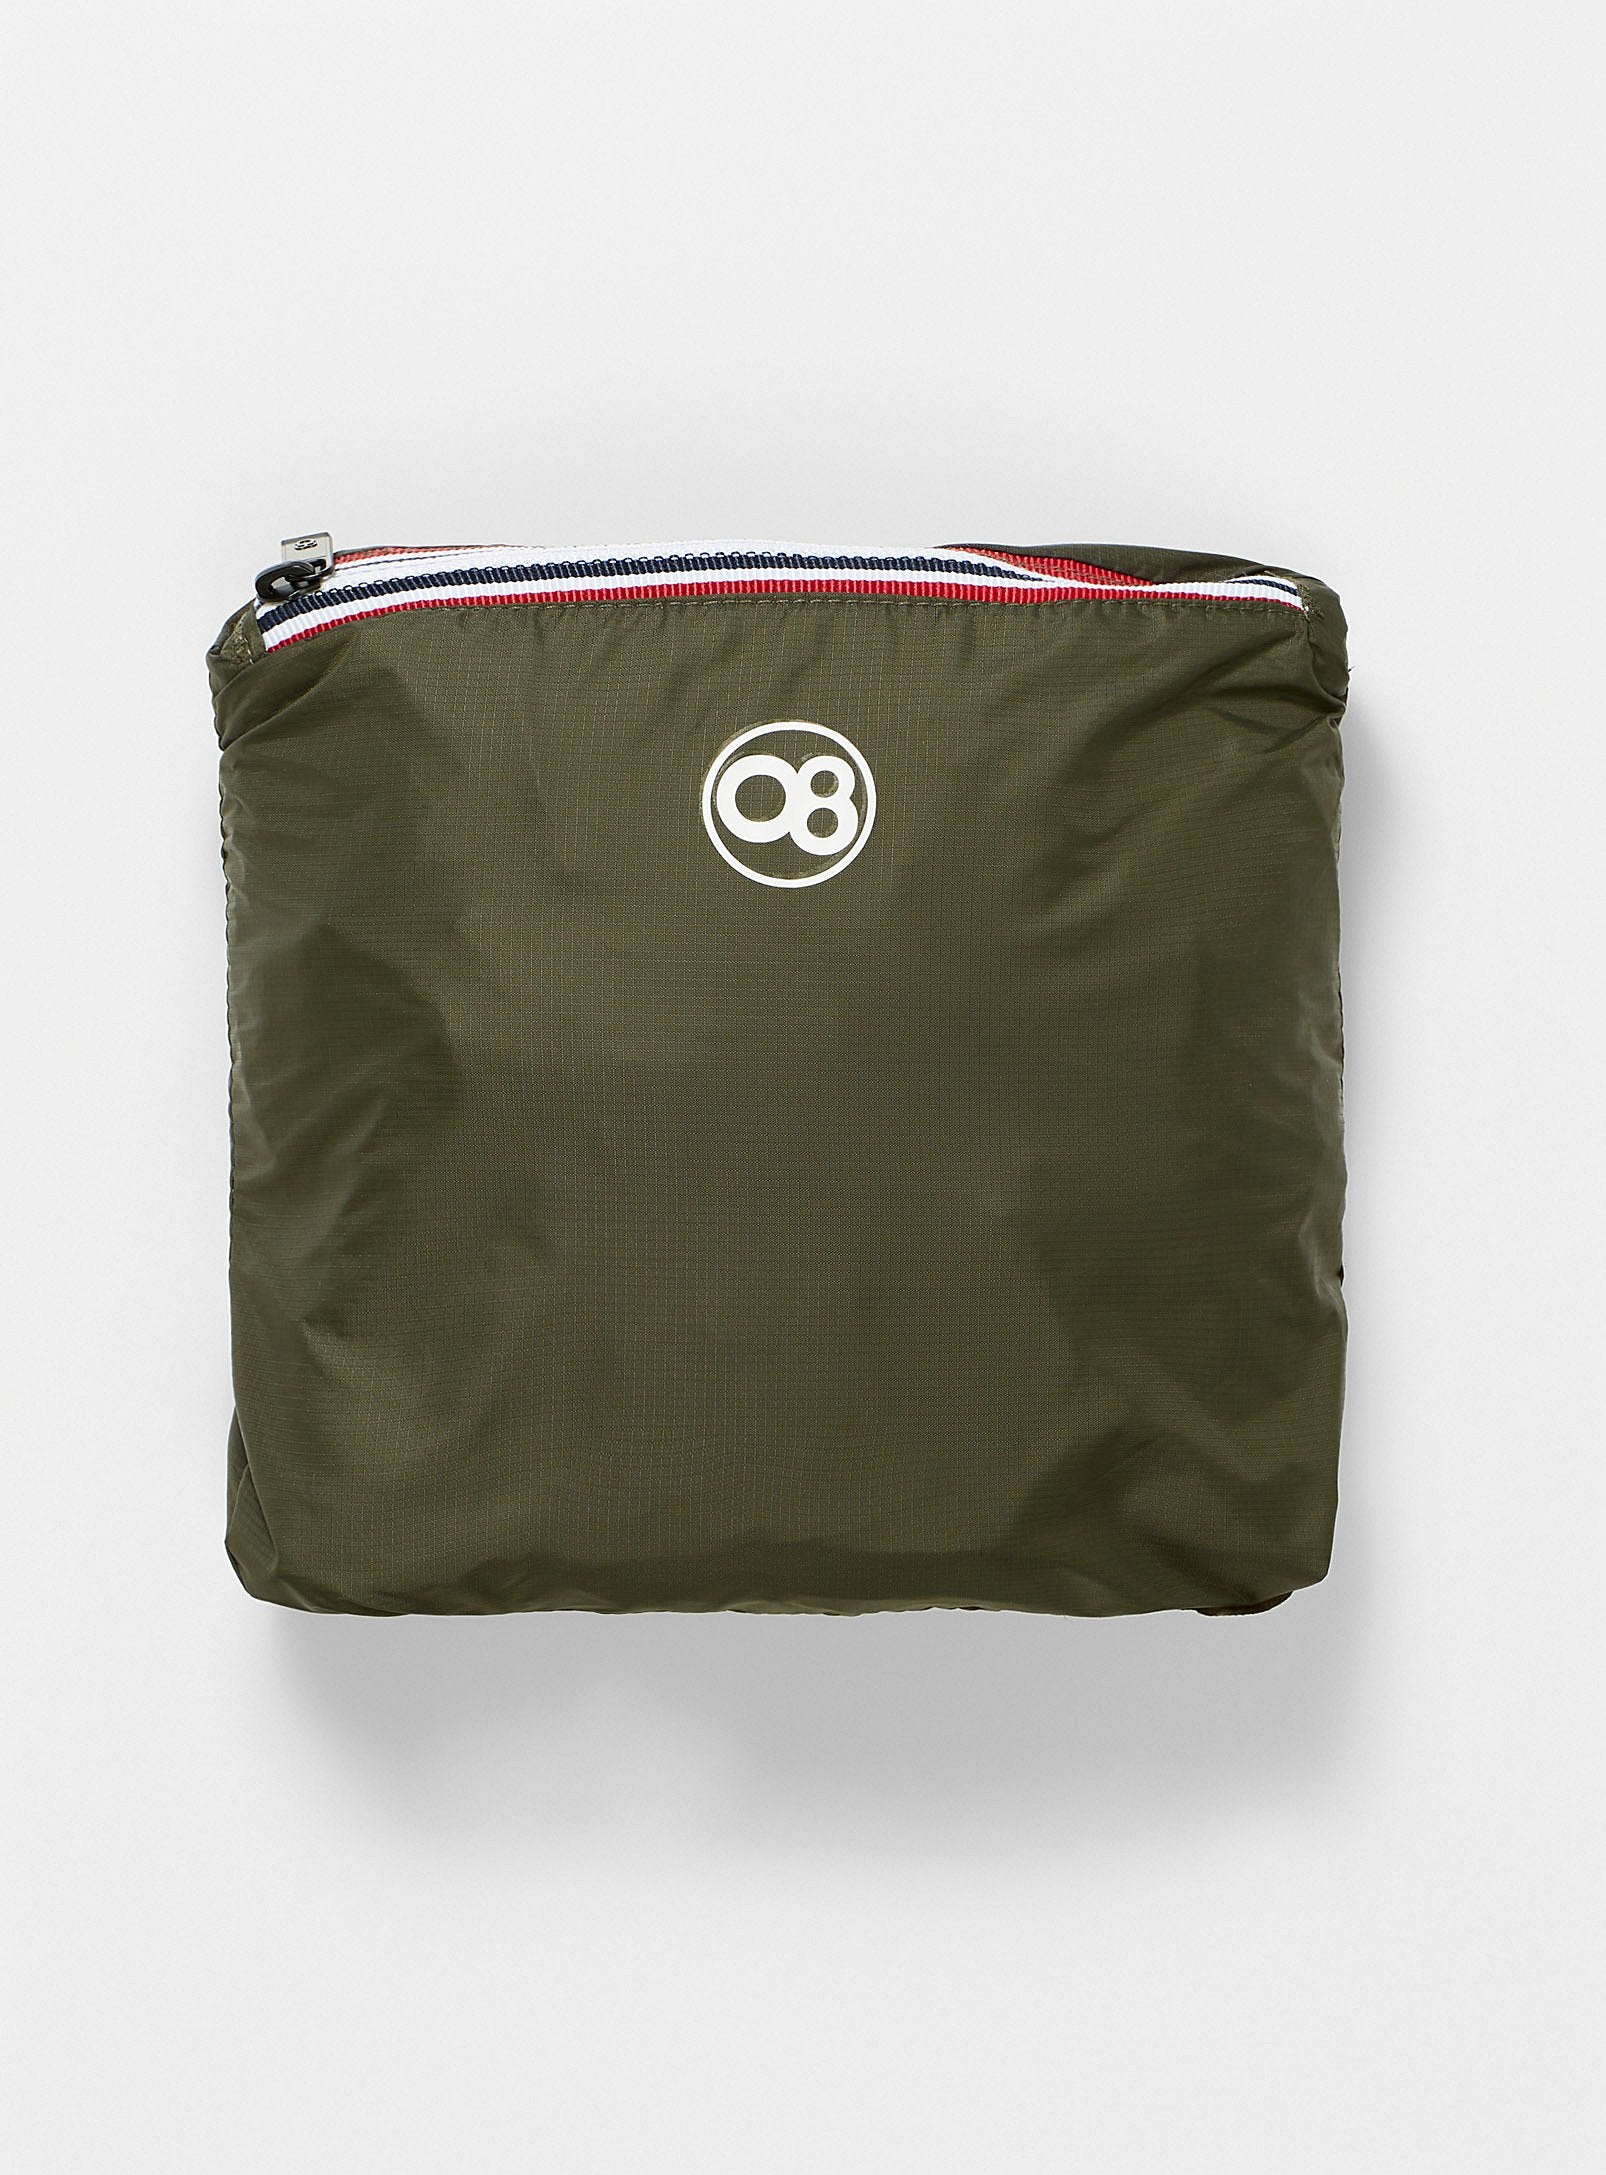 Picture of a Men's Quarter Zip Olive Green Waterproof Rain Jacket storage bag